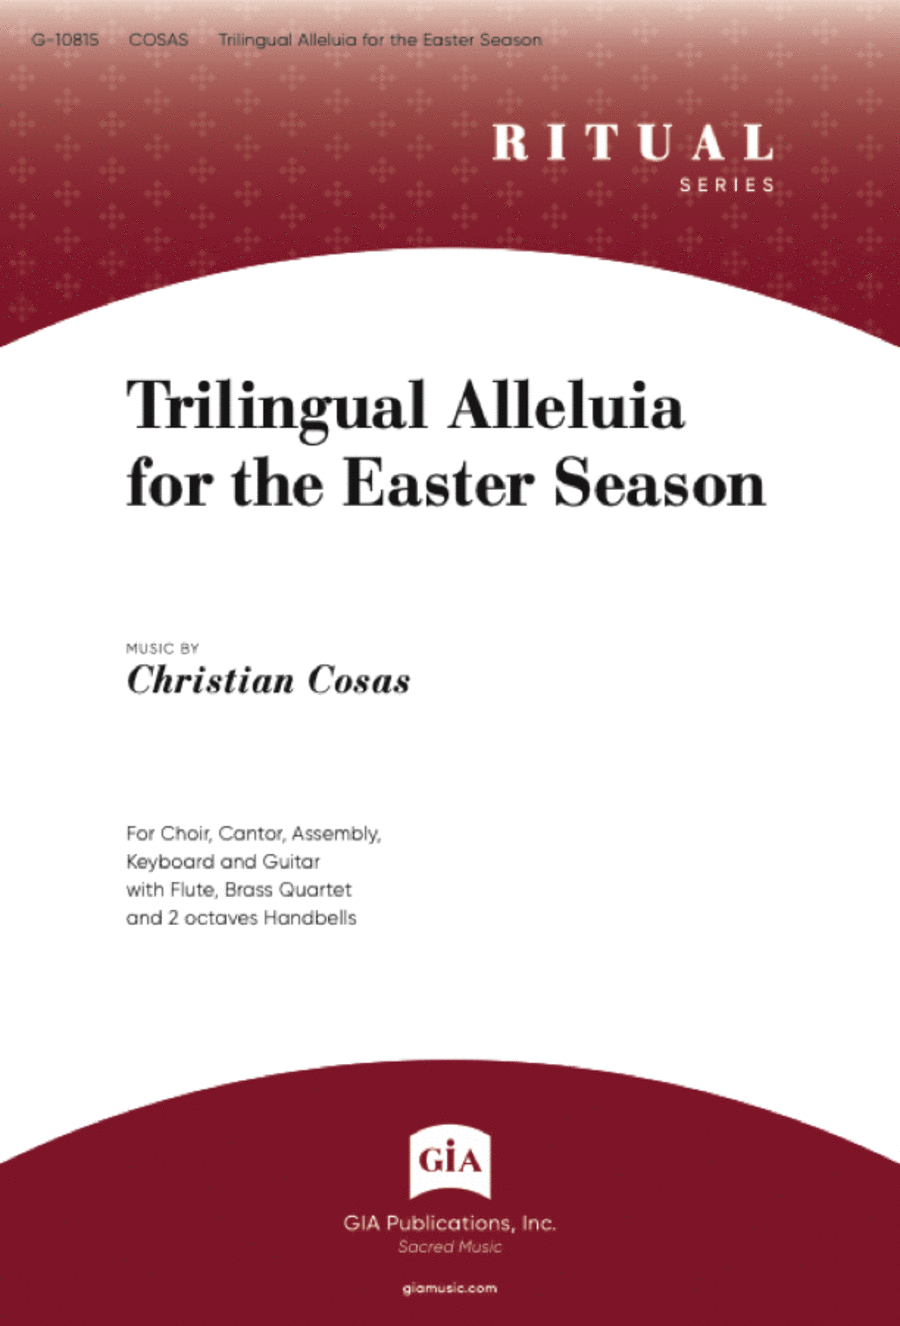 Trilingual Alleluia for the Easter Season - Handbell edition